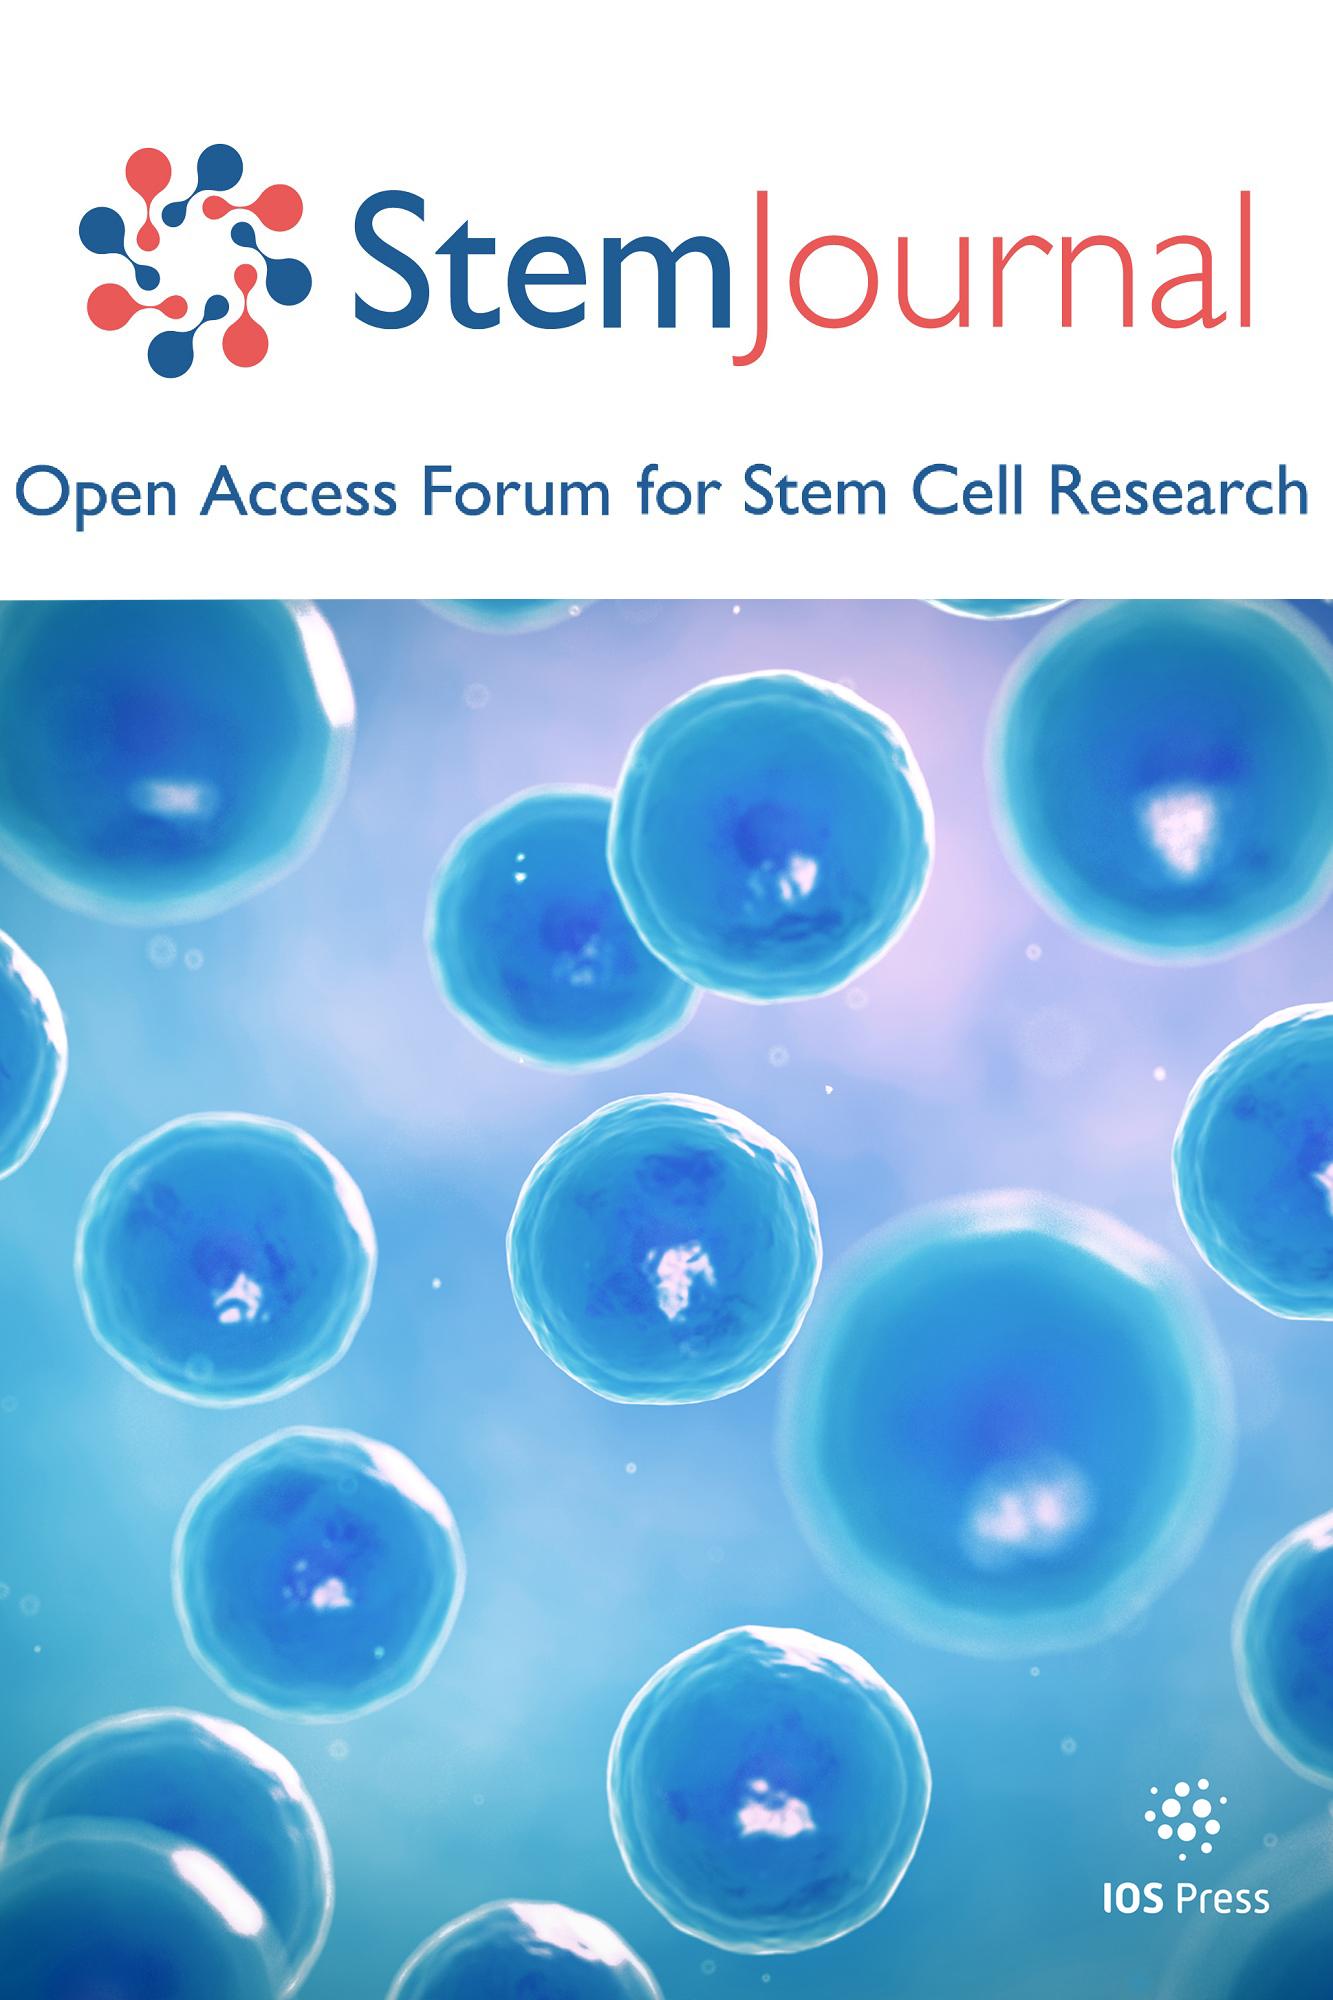 StemJournal logo and tagline and blue stem cells visual